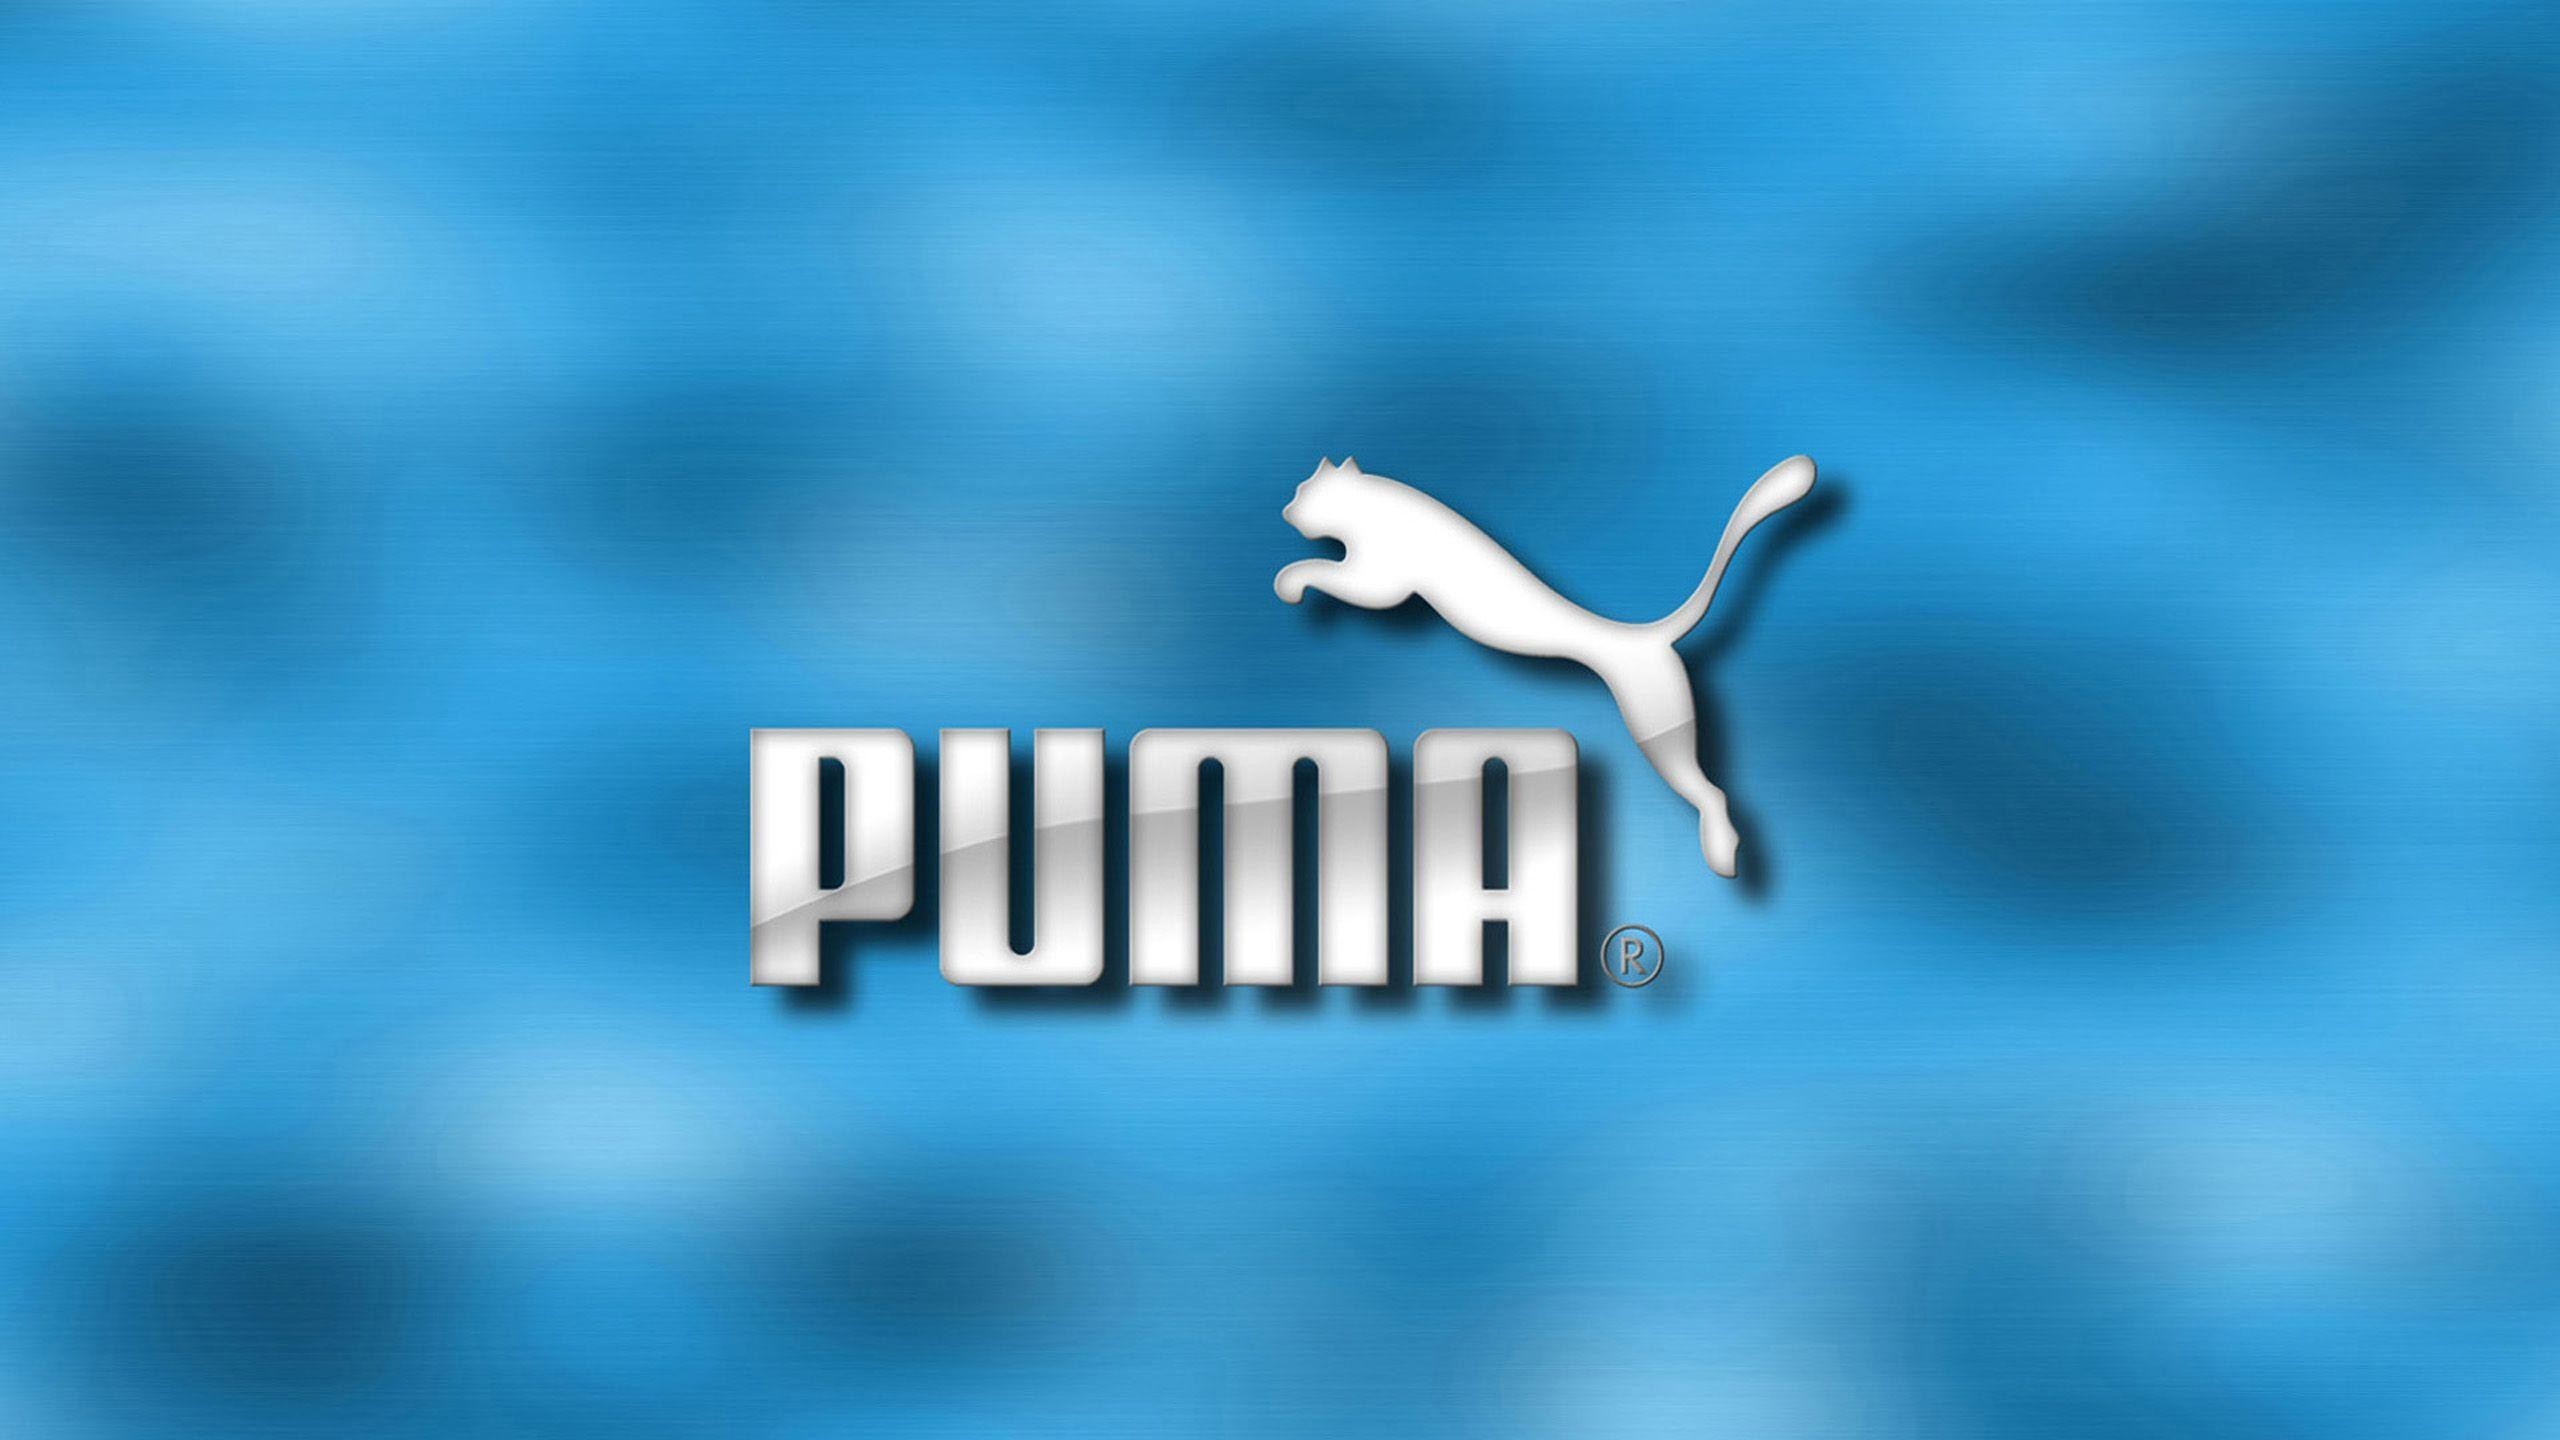 2560x1440  Famous logo-Puma wallpapers, HD Wallpaper Downloads